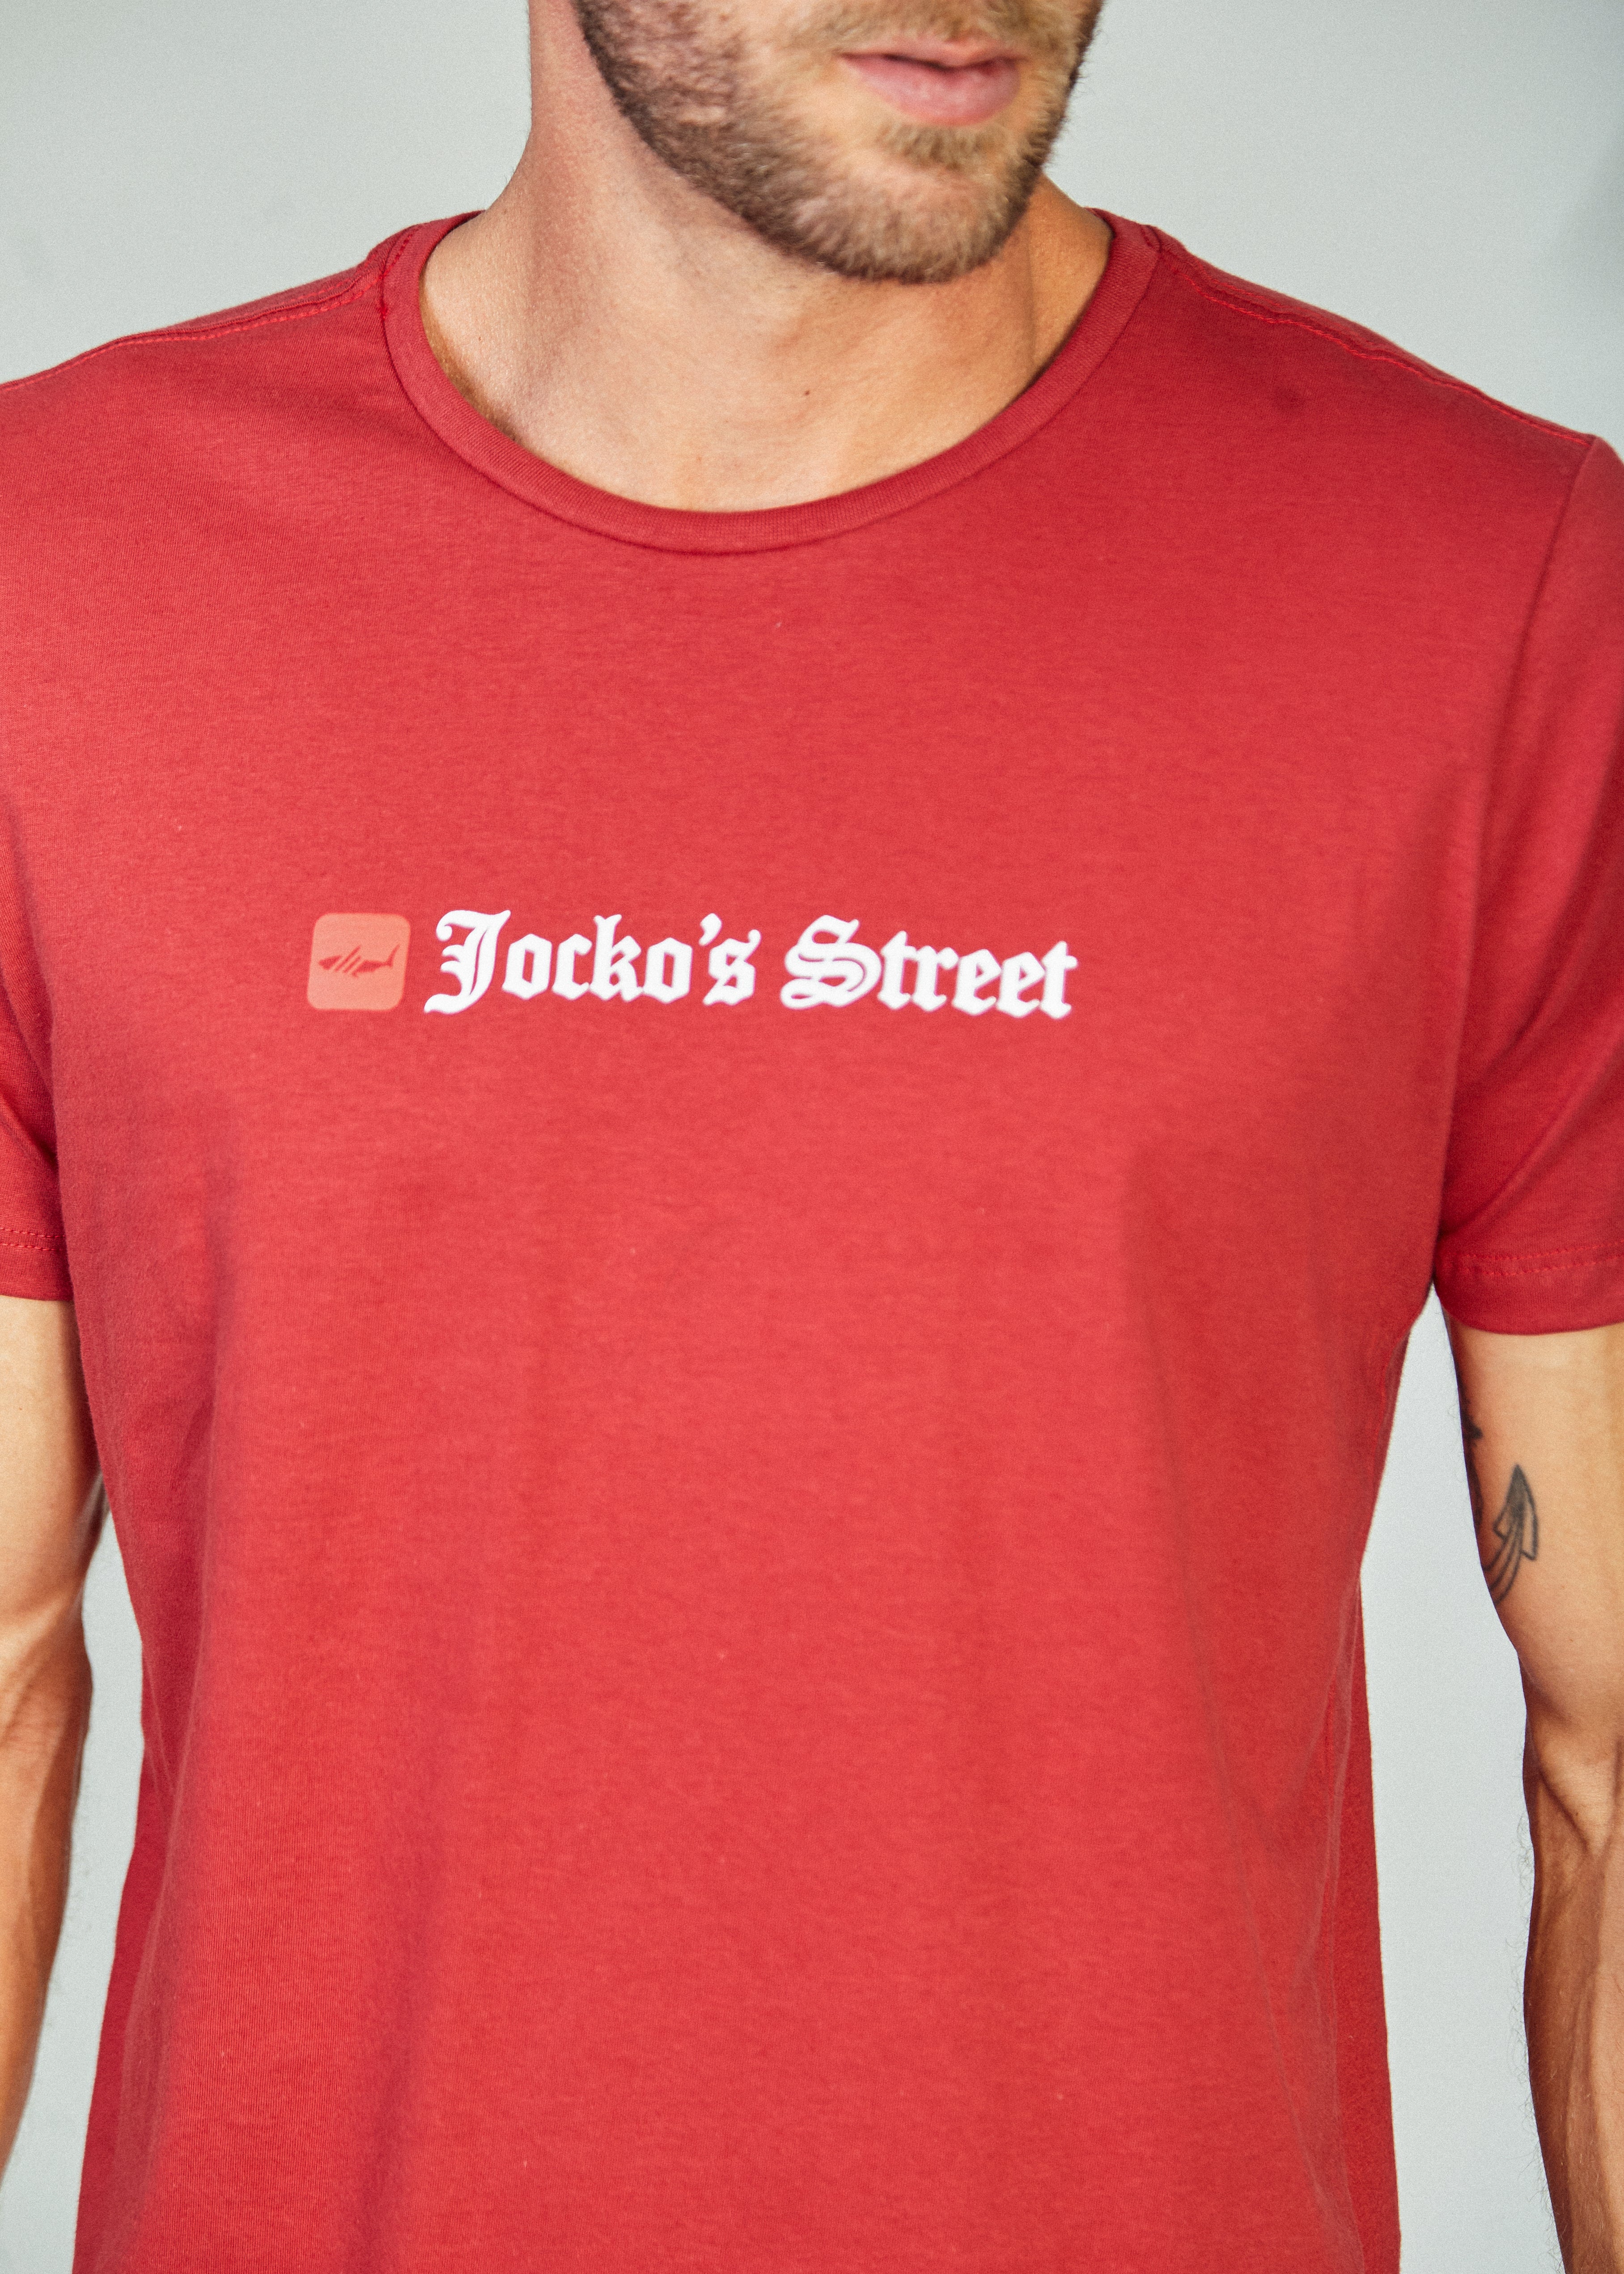 Camiseta Estampada Jocko's Street - Bordô